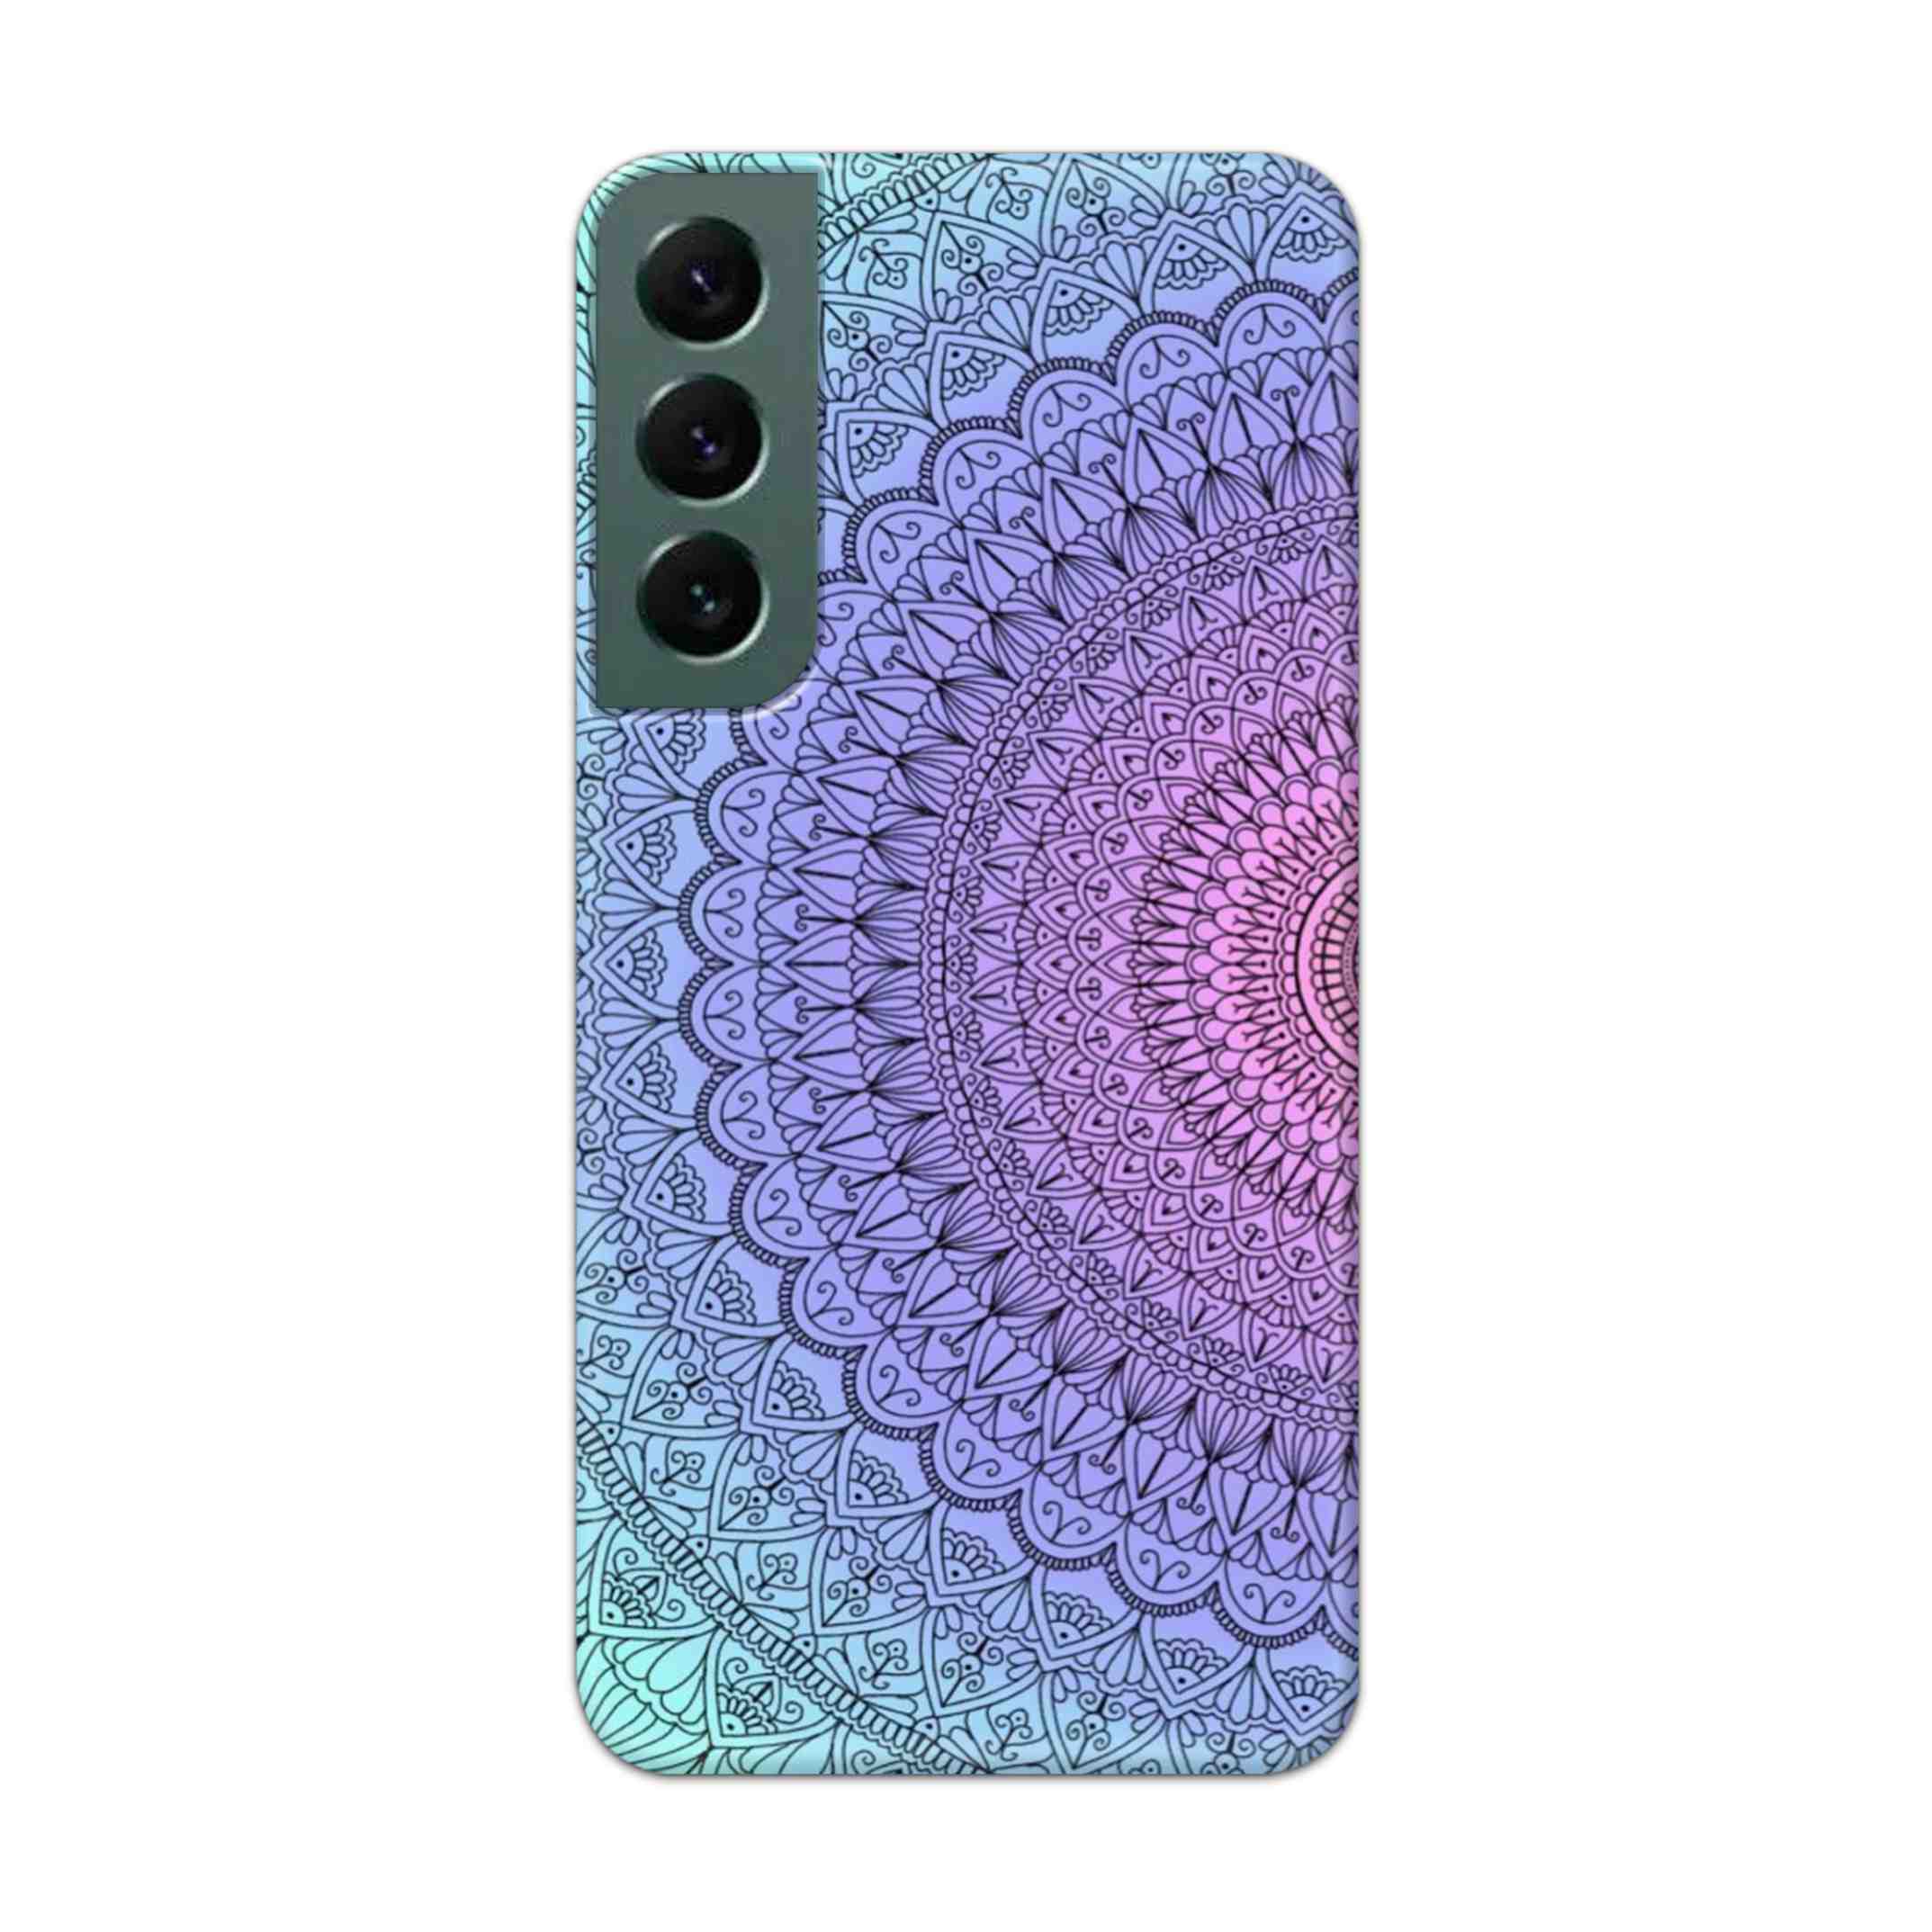 Buy Colourful Mandala Hard Back Mobile Phone Case Cover For Samsung S22 Online